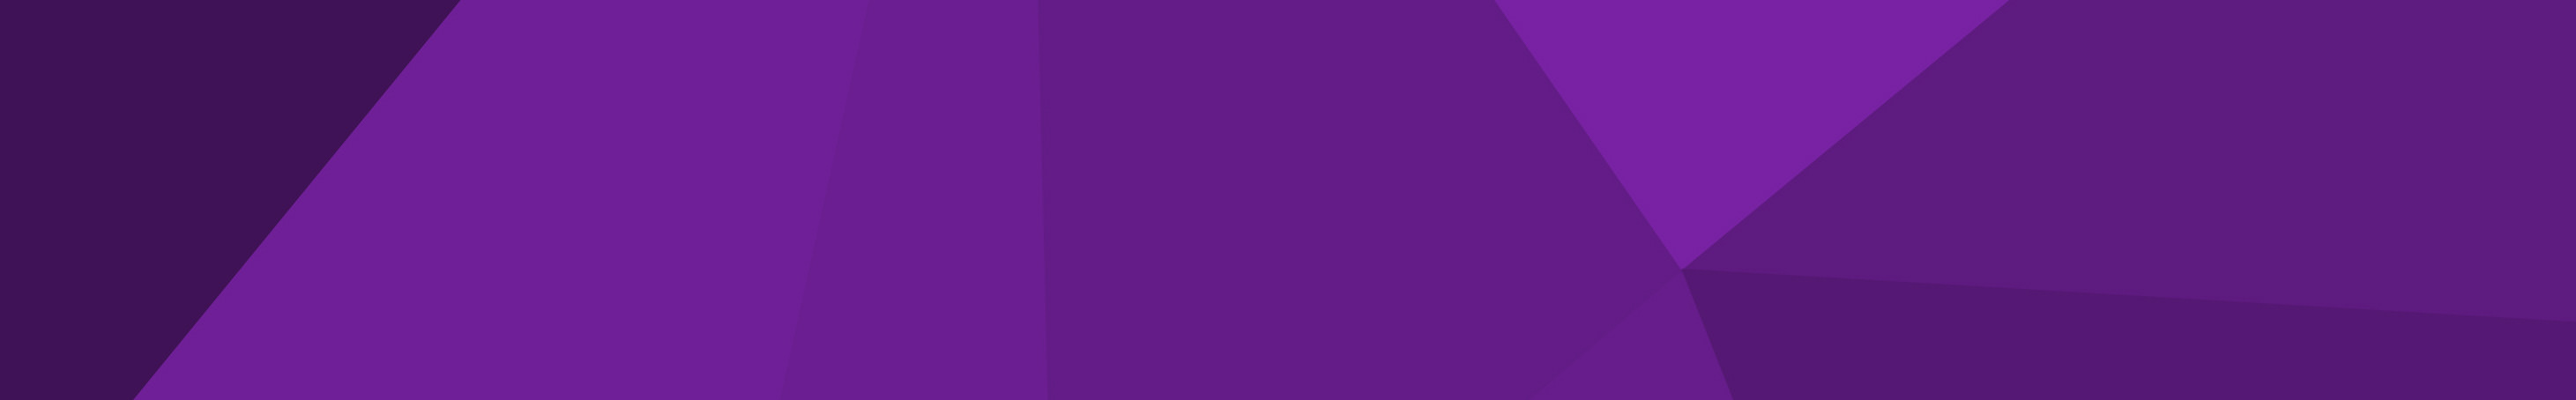 purpleLime Tr's profile banner